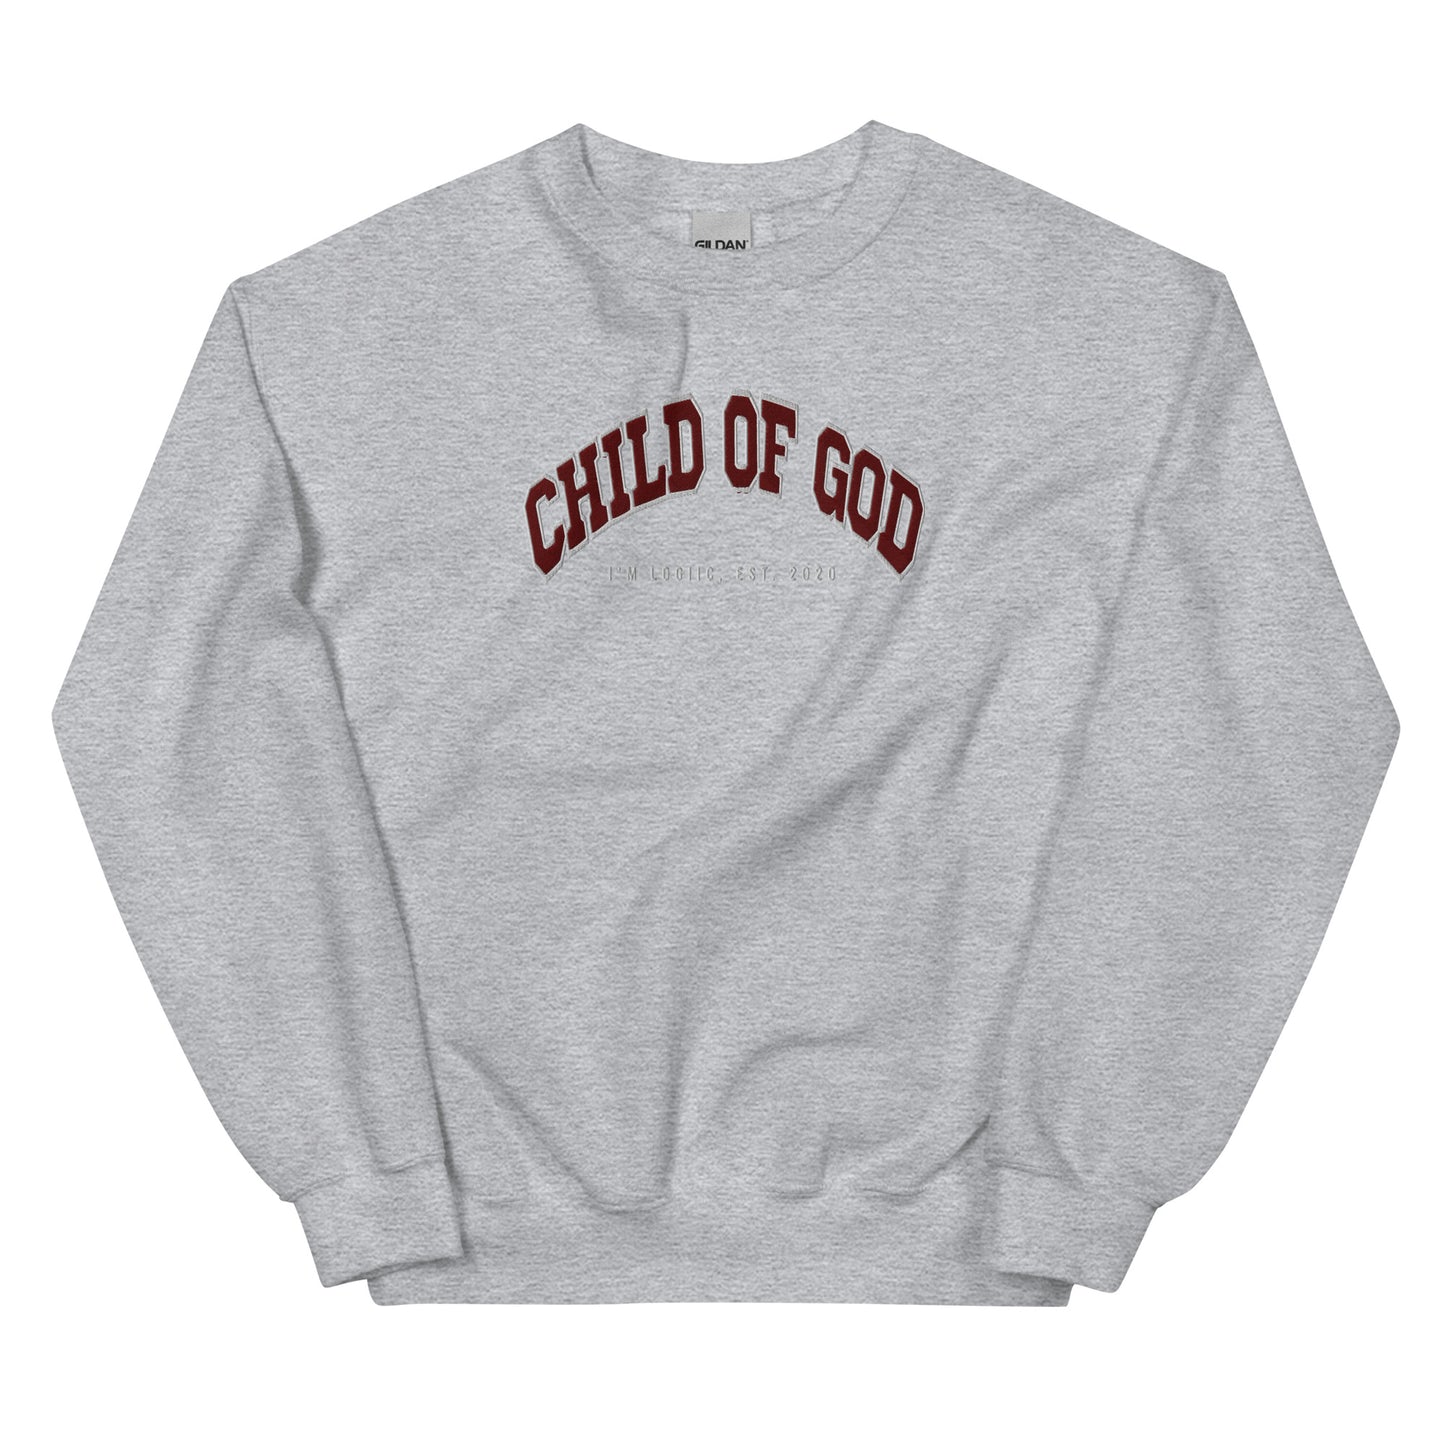 Child of God Unisex Sweatshirt - Sport Grey / S